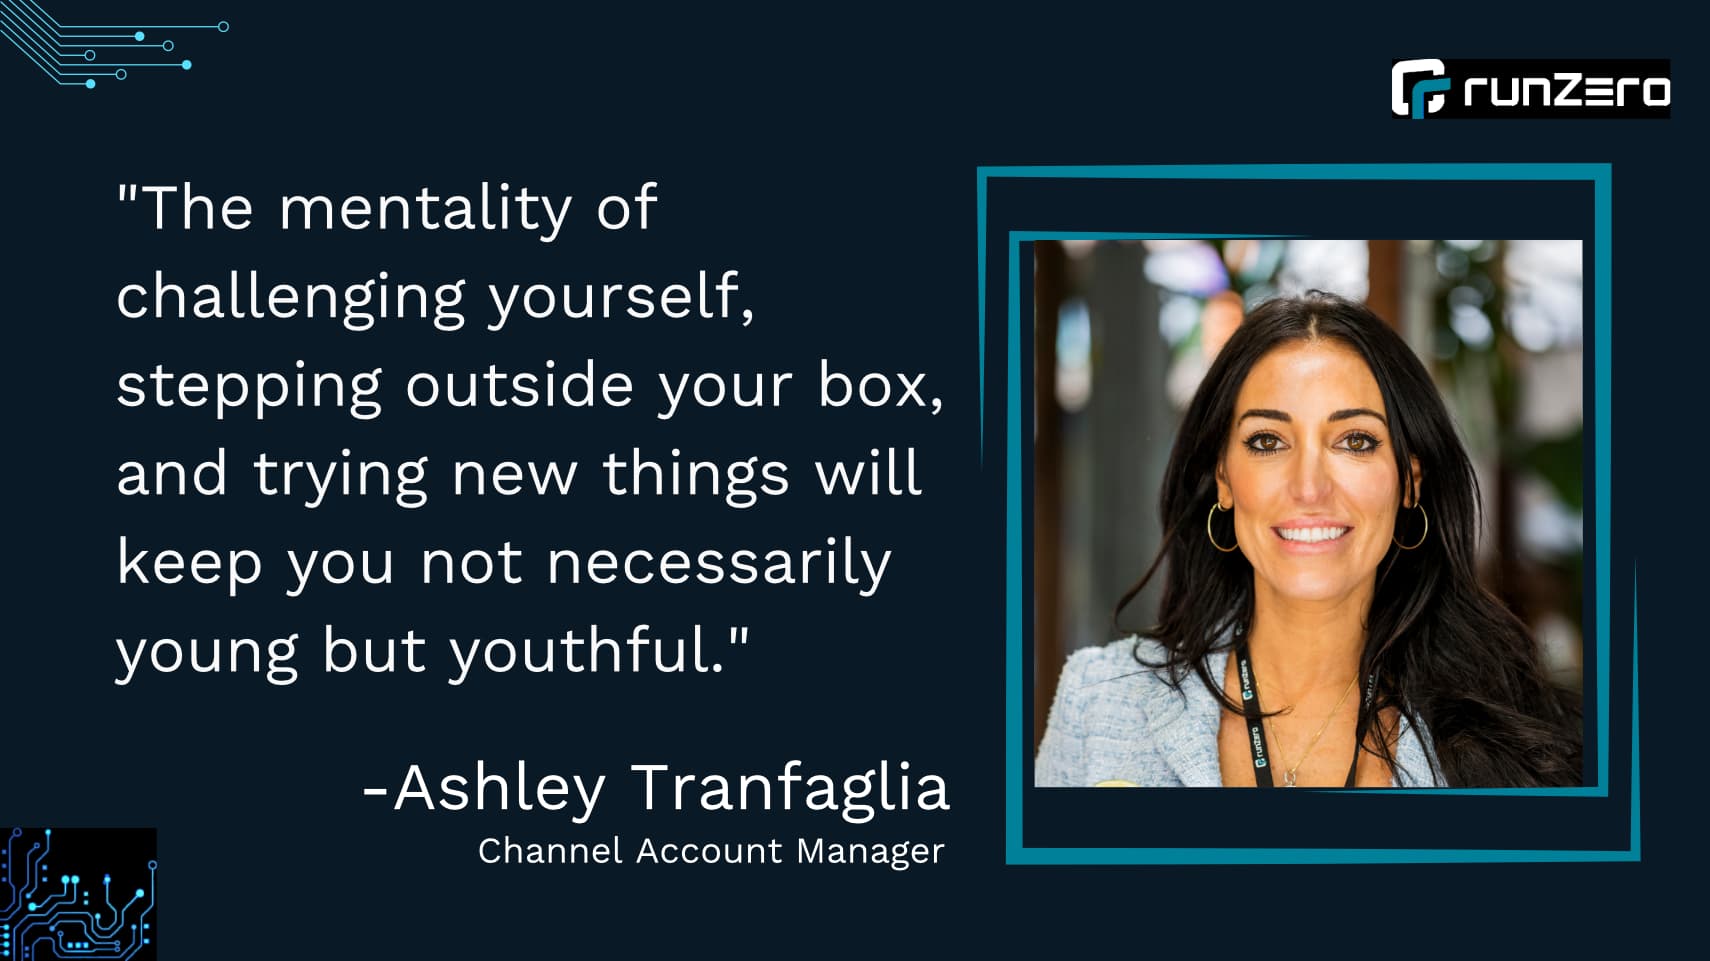 Employee Spotlight: Ashley Tranfaglia